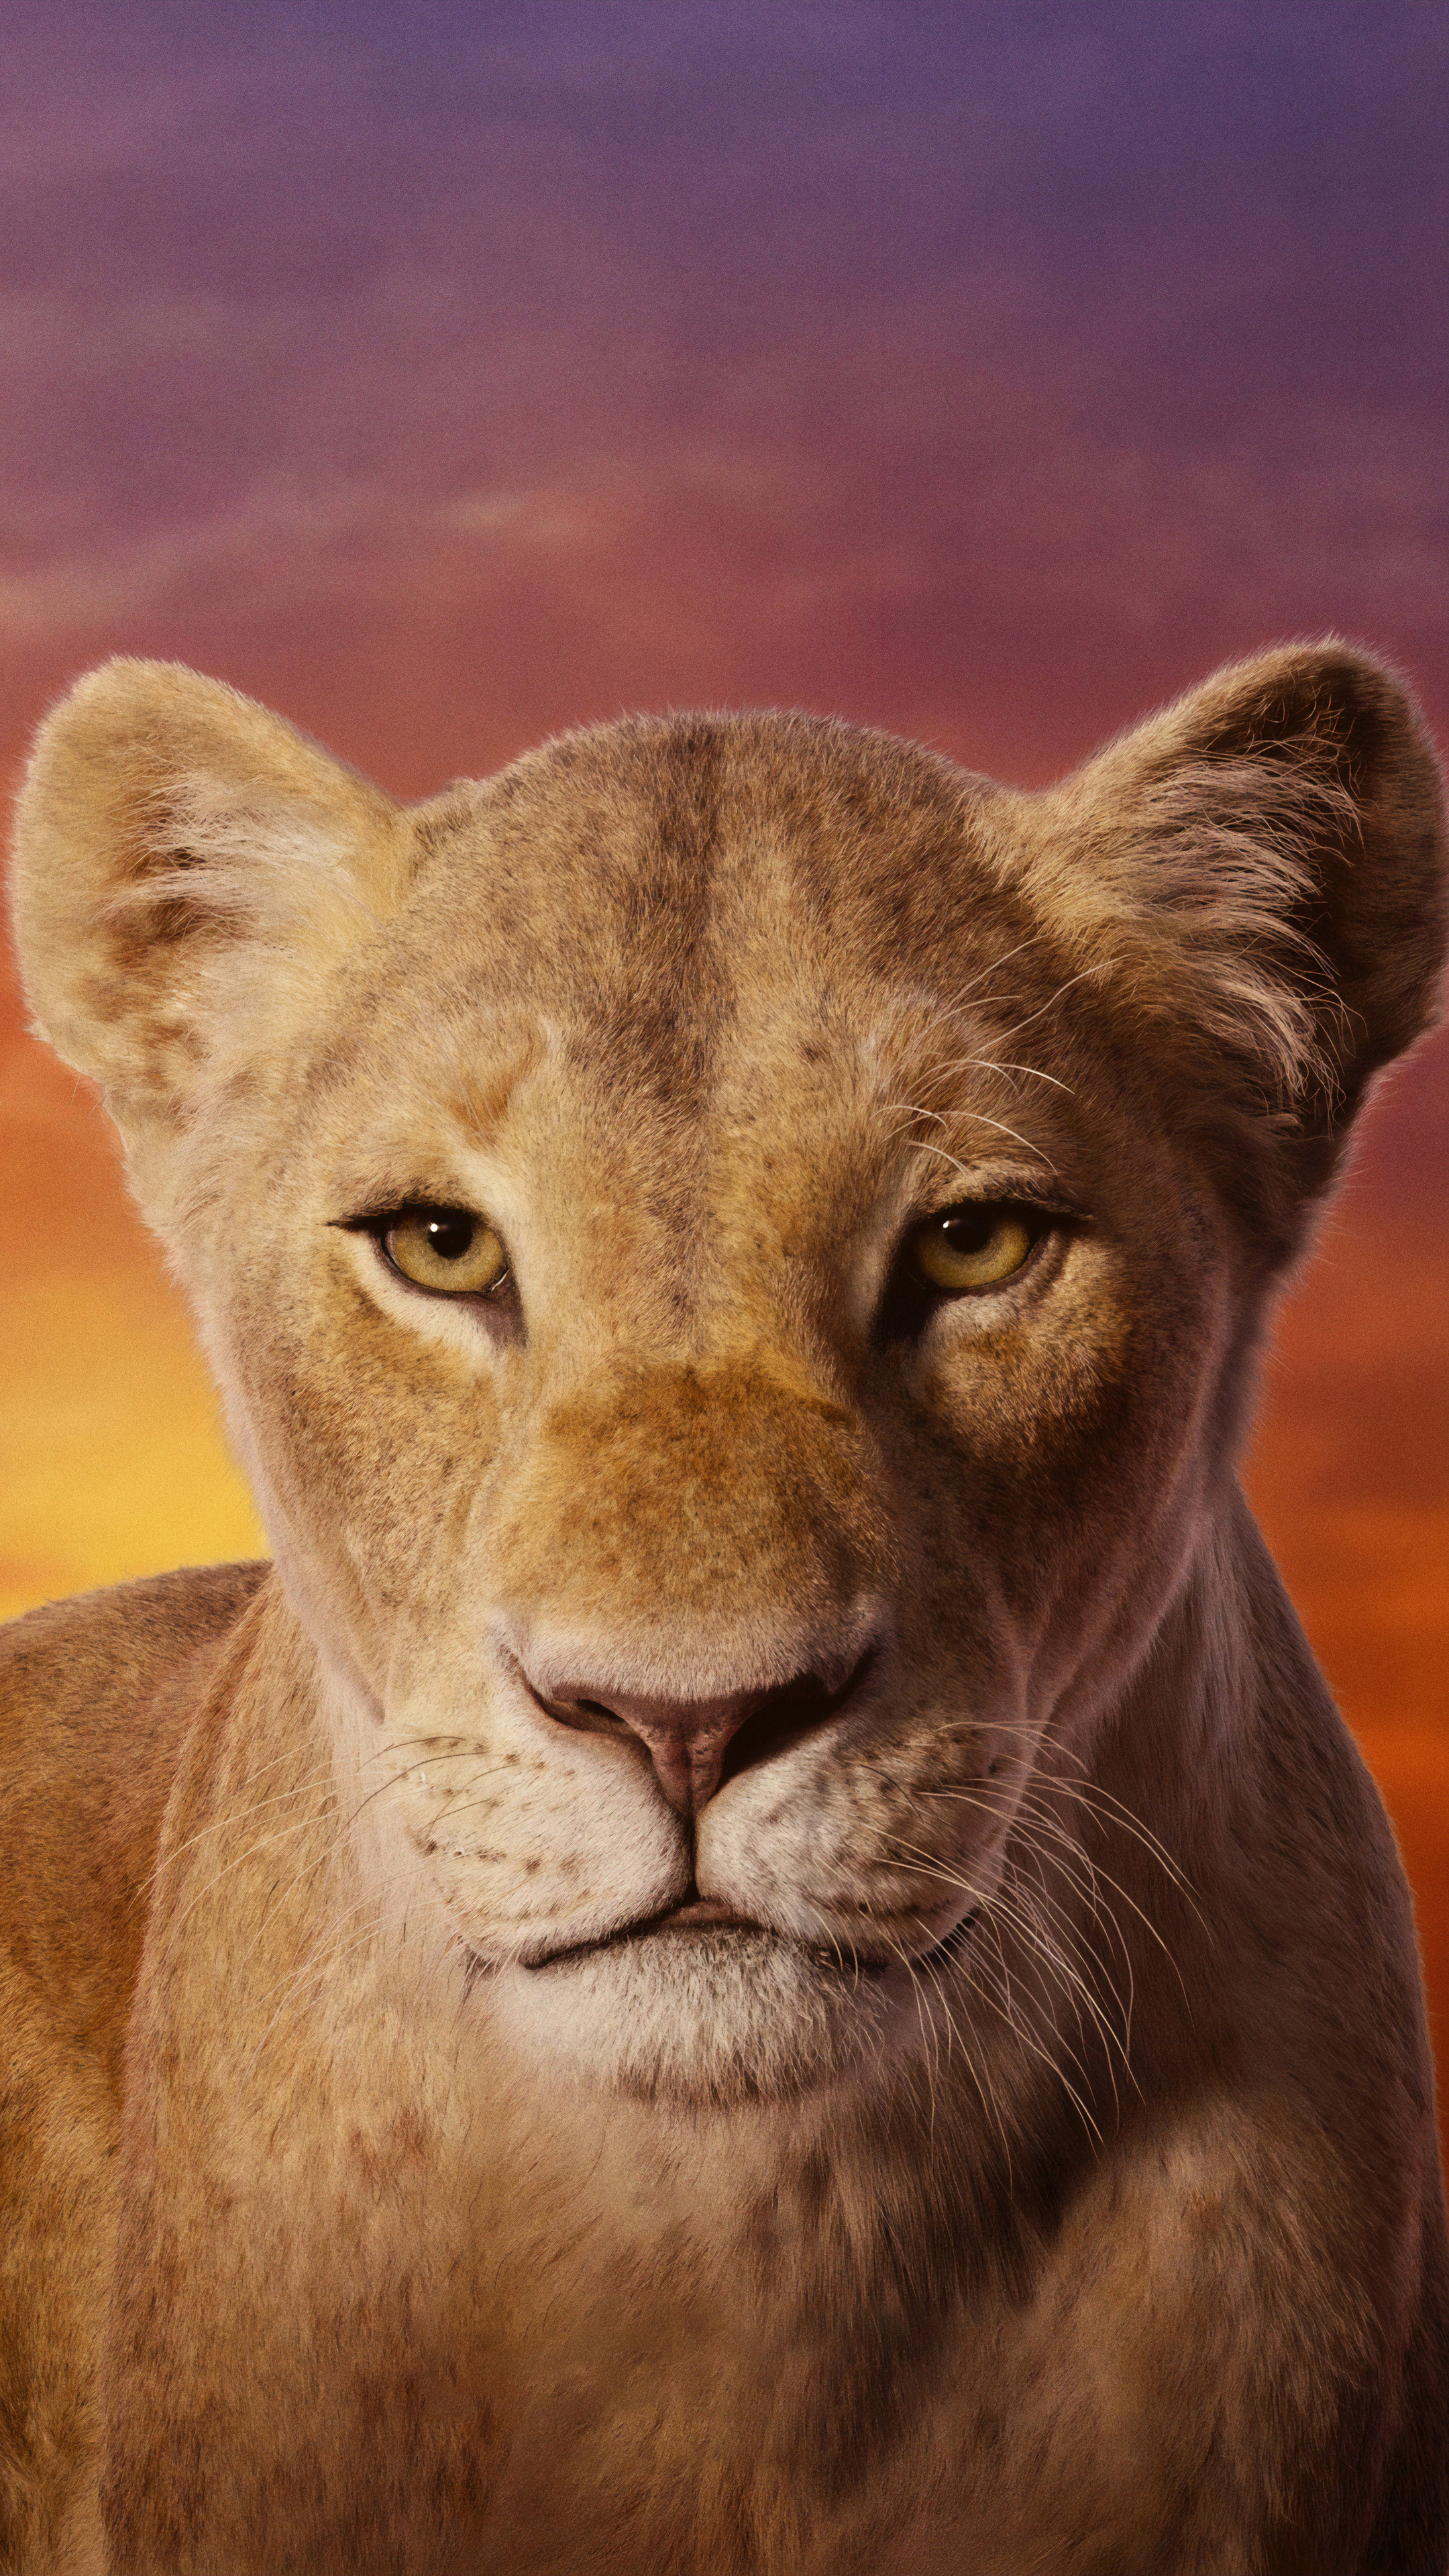 The Lion King, Beyonce as Nala, Stunning 4K imagery, Iconic characters, 2160x3840 4K Handy